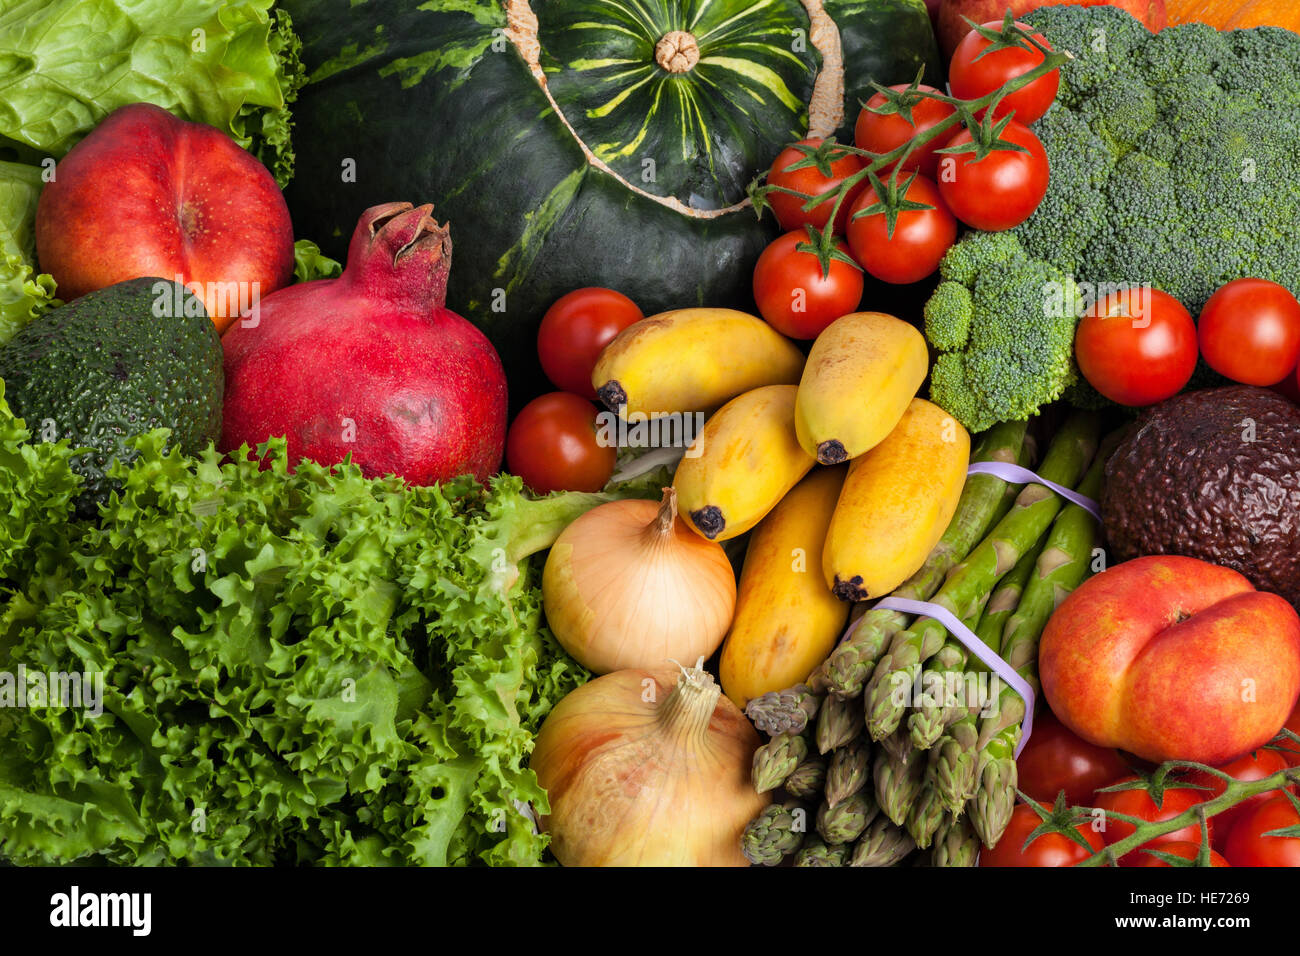 Image of fresh summer vegetables Stock Photo